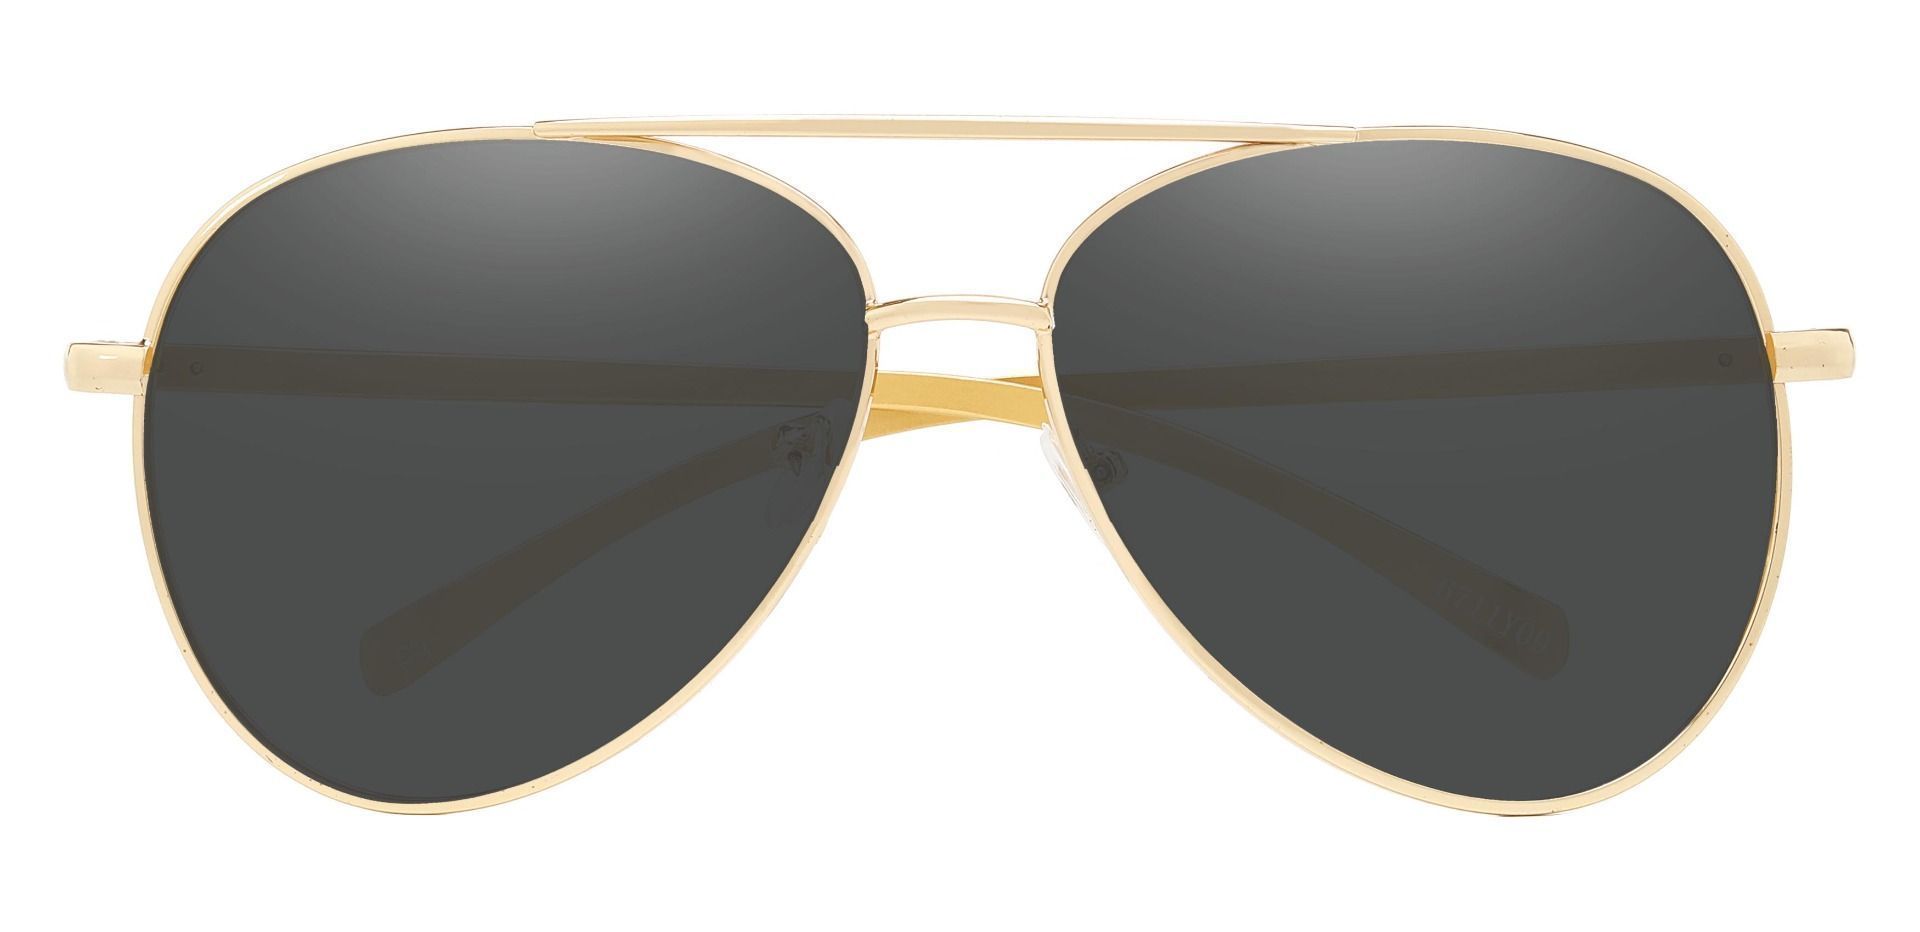 Marius Aviator Reading Sunglasses - Gold Frame With Gray Lenses